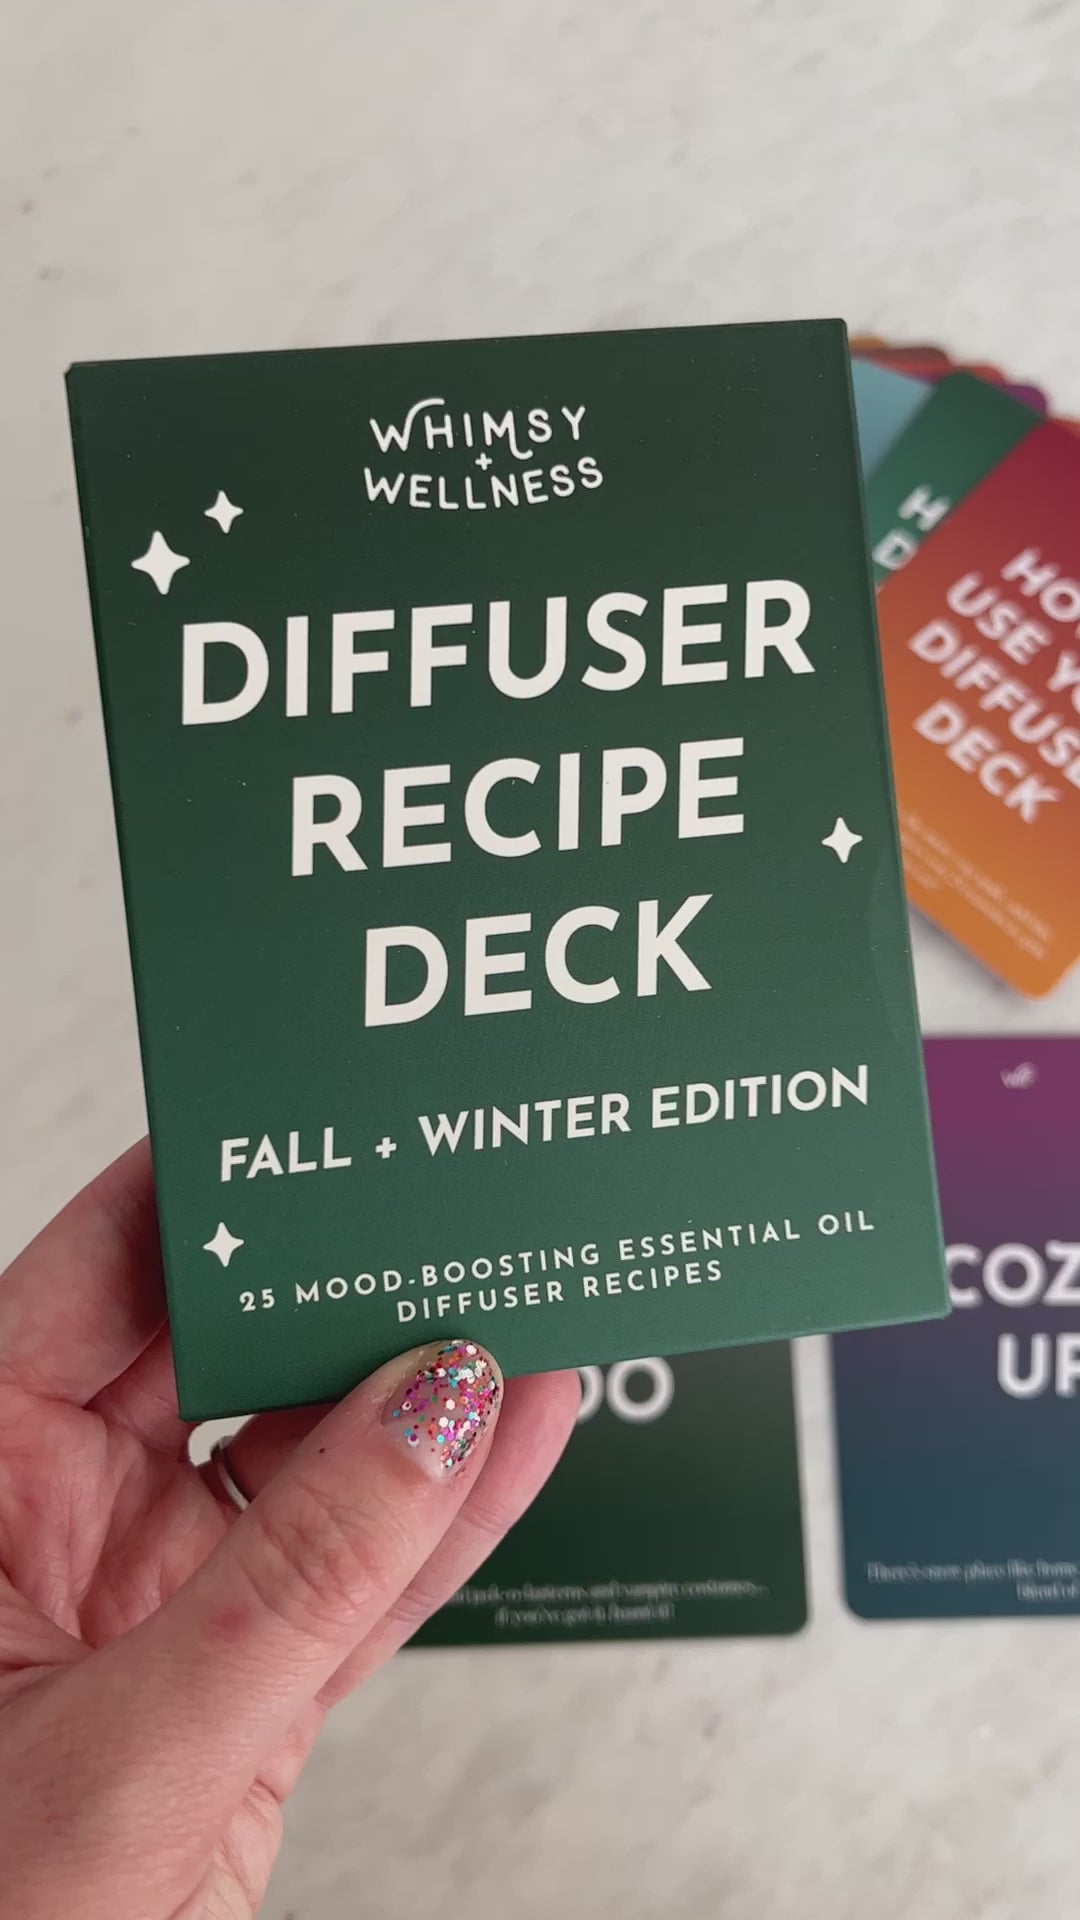 Diffuser Recipe Deck: Essential Oil Diffuser Recipes